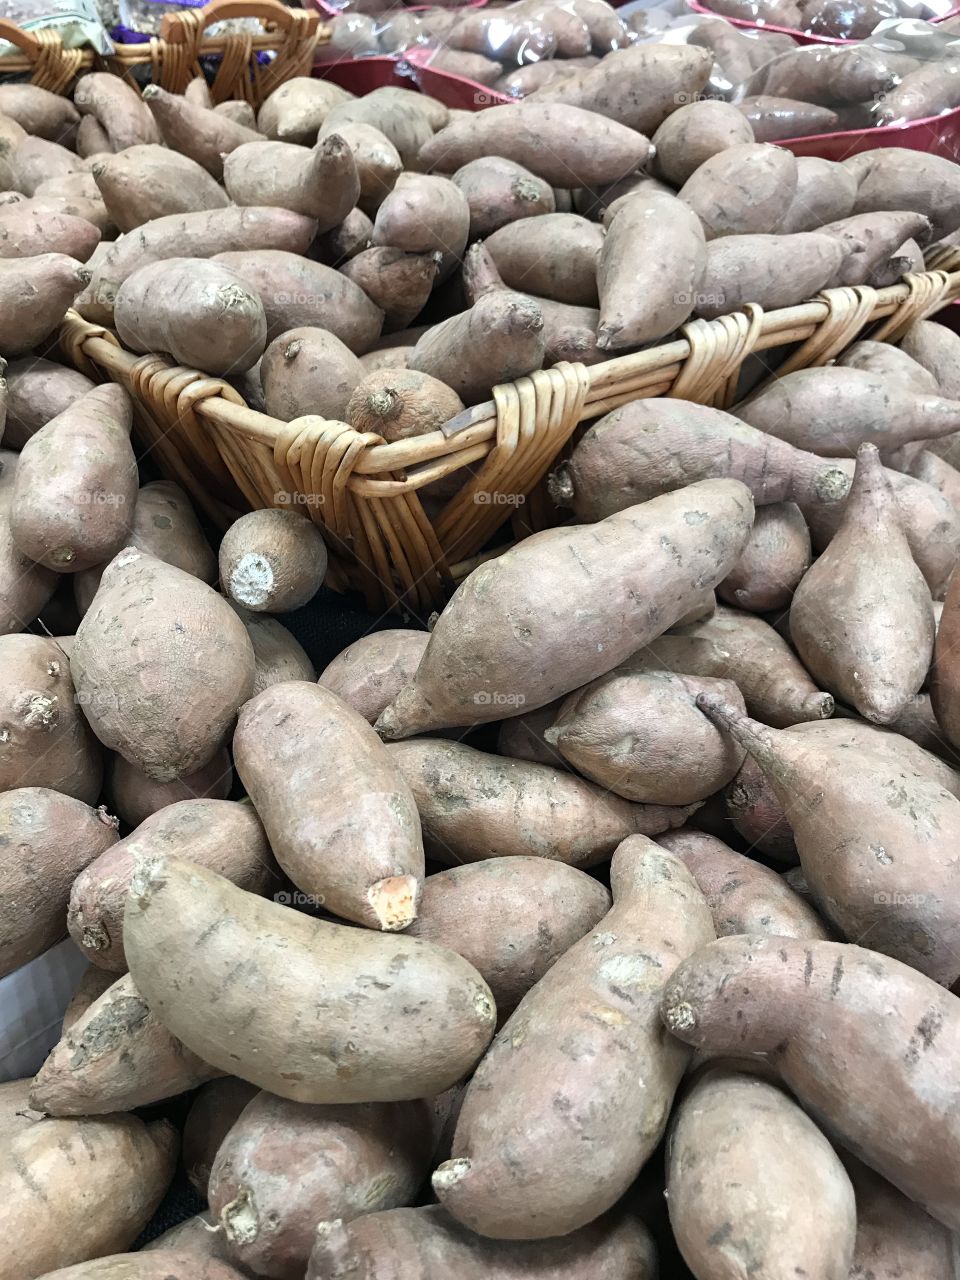 Basket display of sweet potatoes for sale